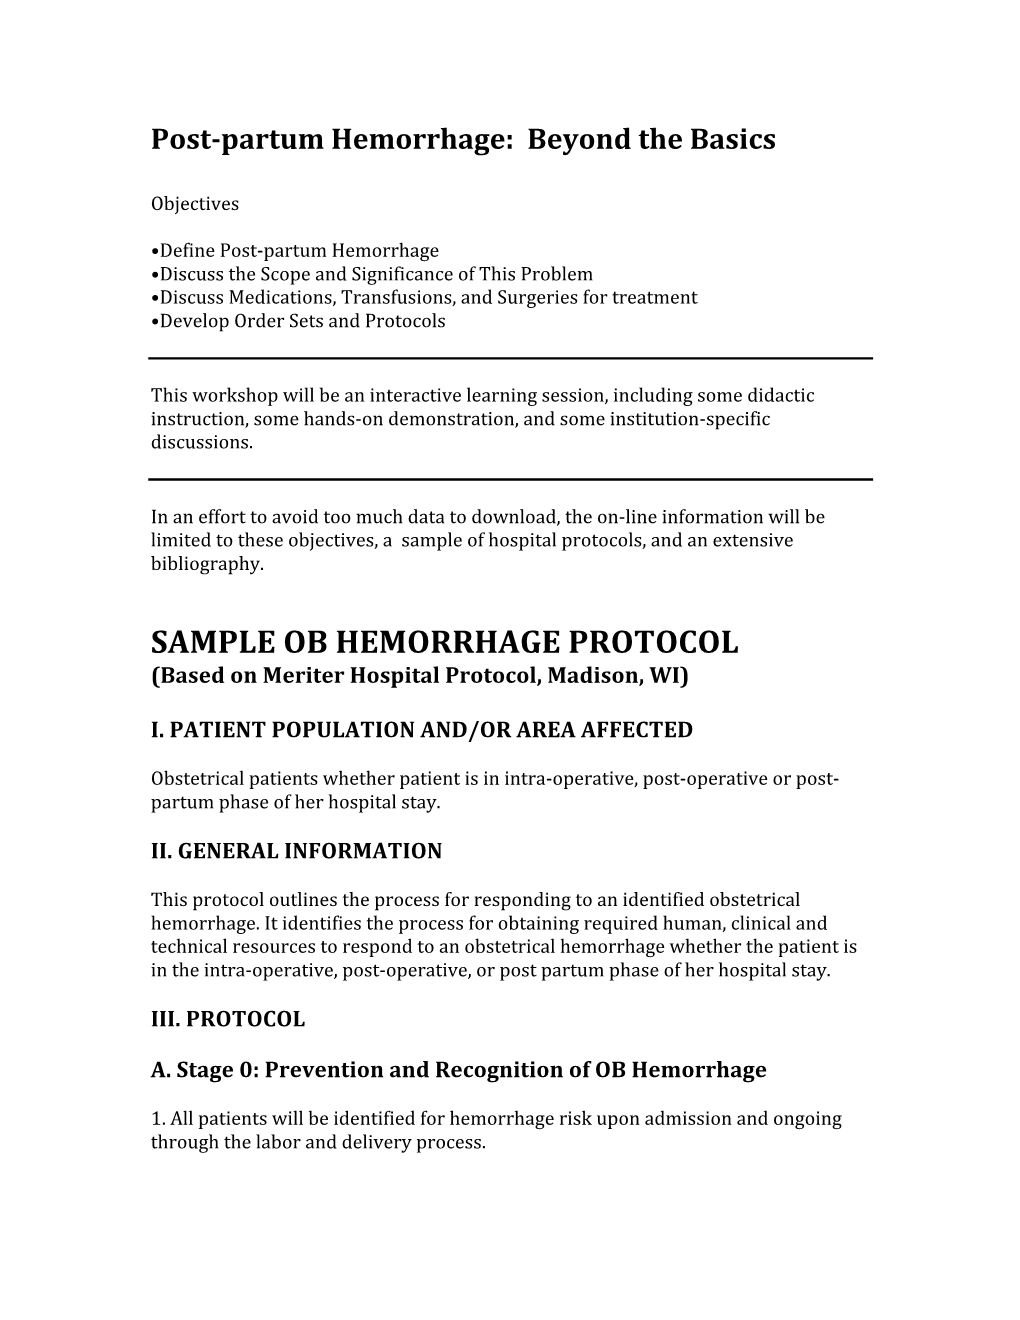 SAMPLE OB HEMORRHAGE PROTOCOL (Based on Meriter Hospital Protocol, Madison, WI)